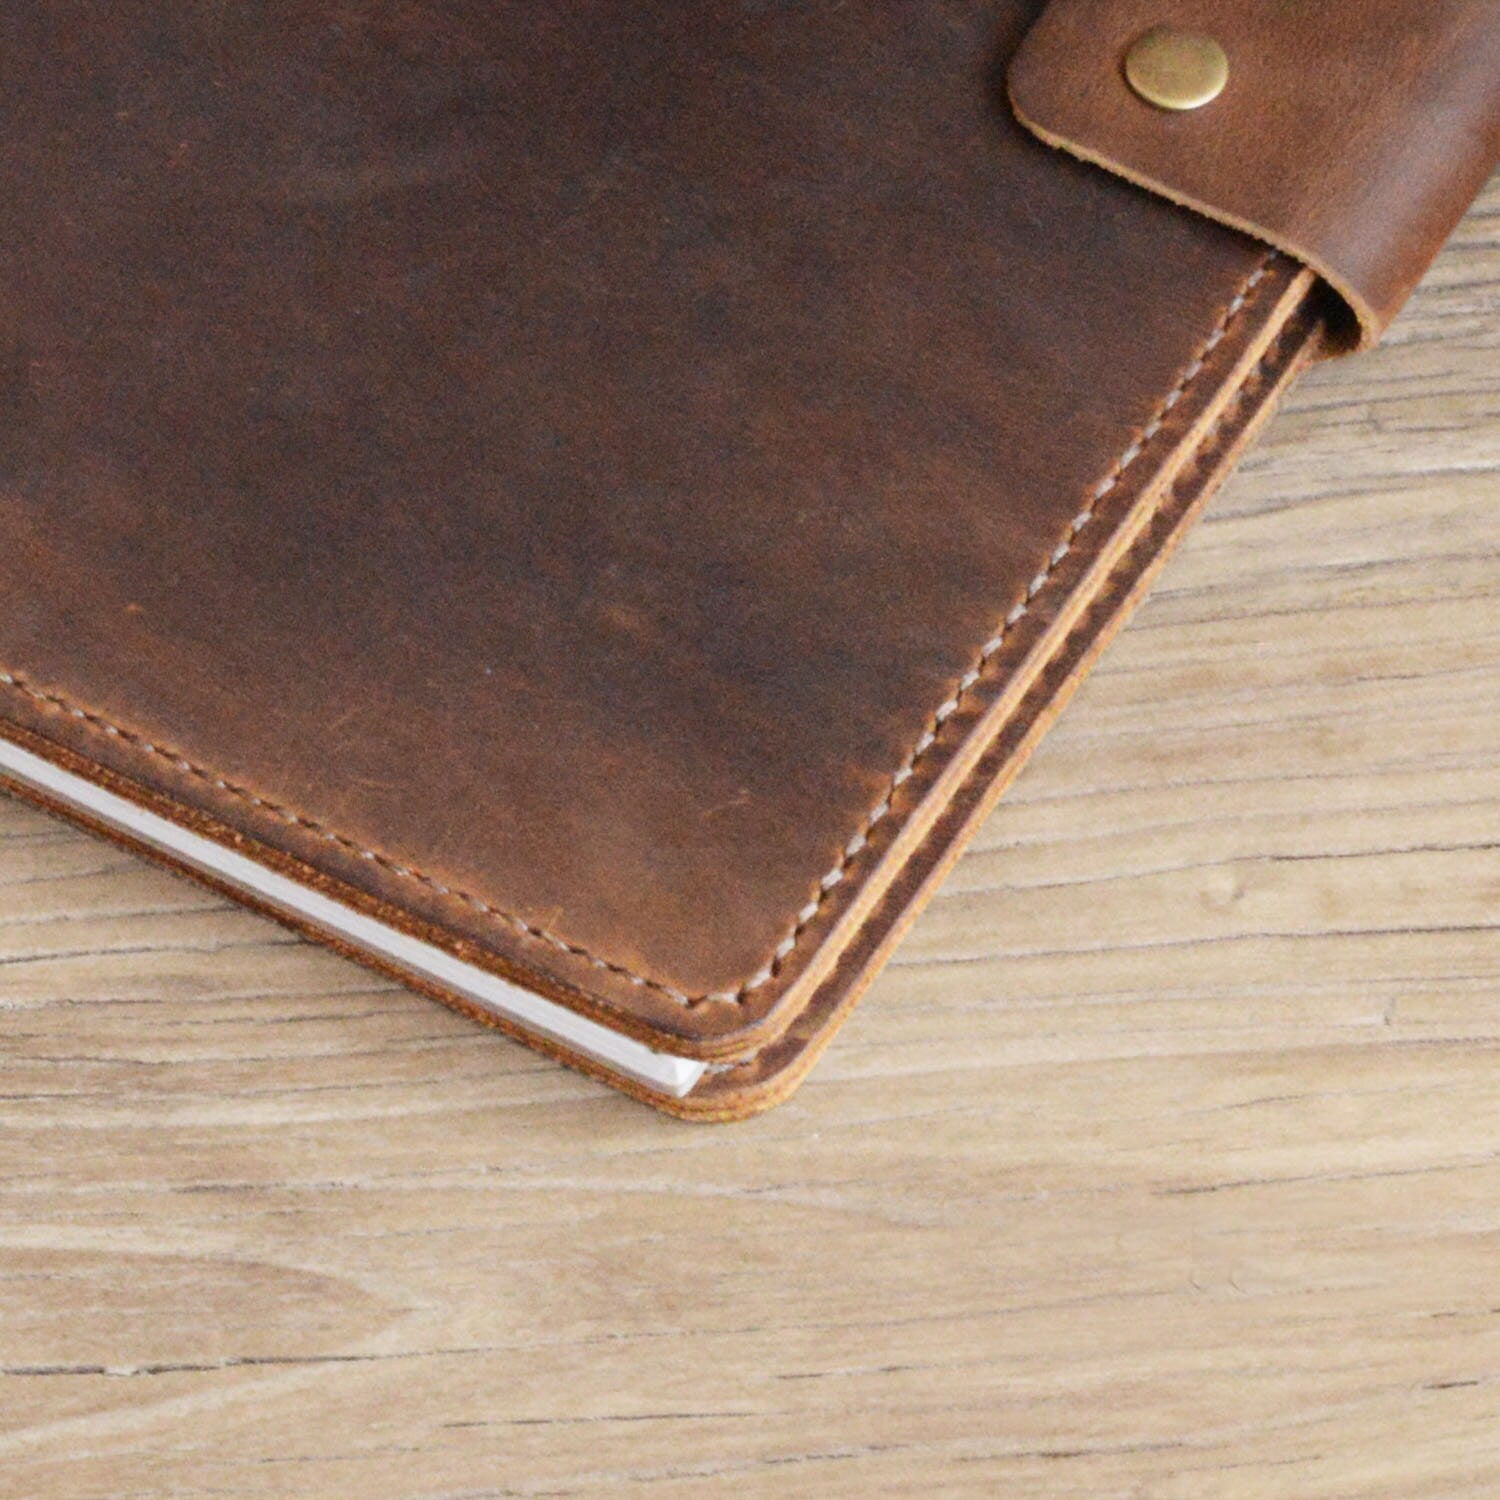 Personalized leather portfolio padfolio for letter size 8.5 x 11